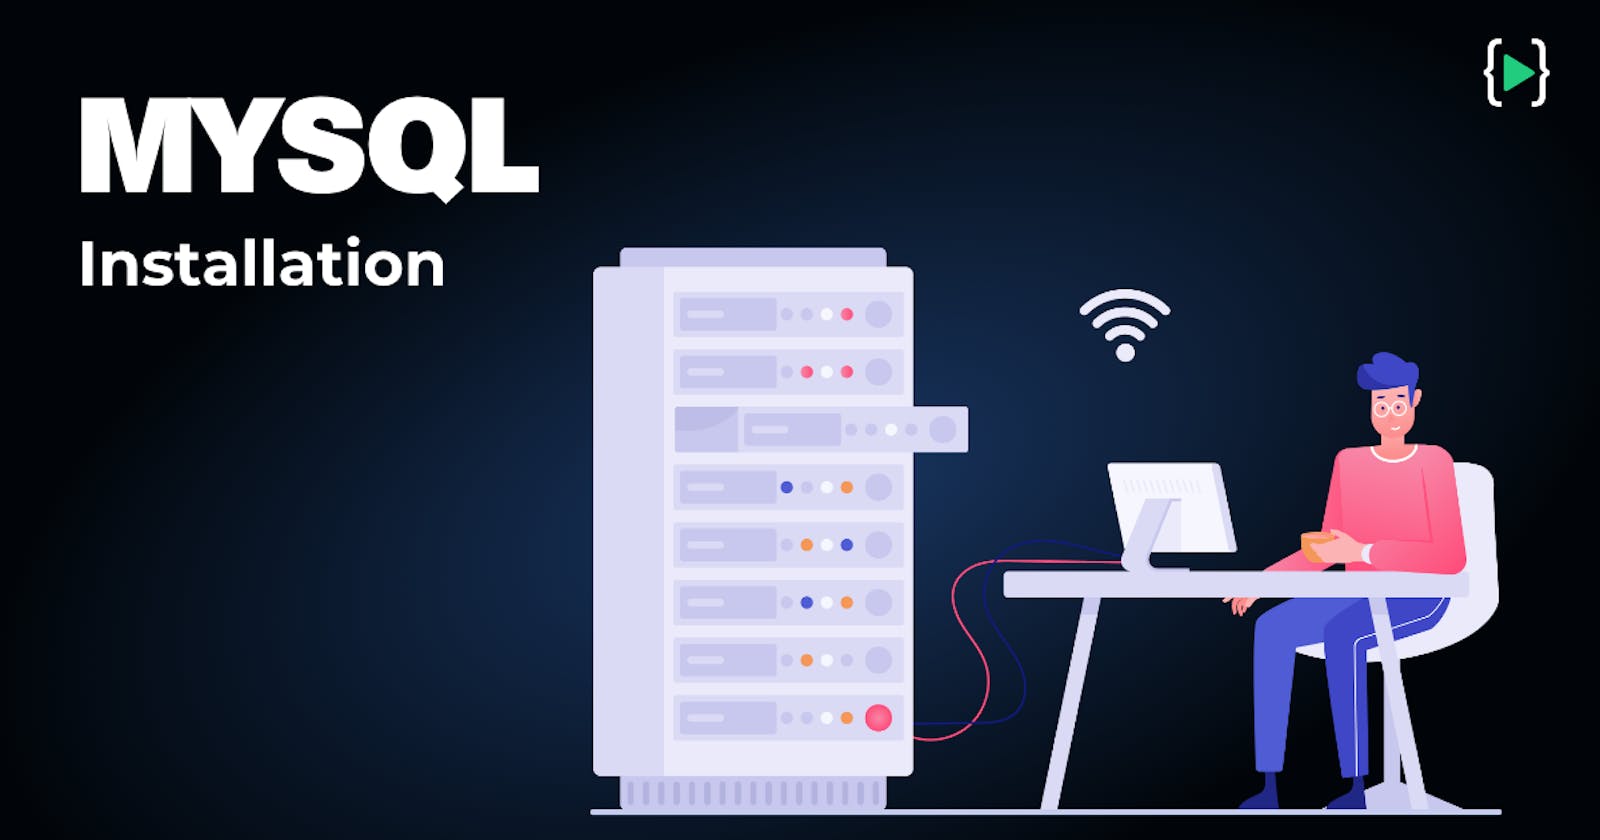 How to install MySQL?